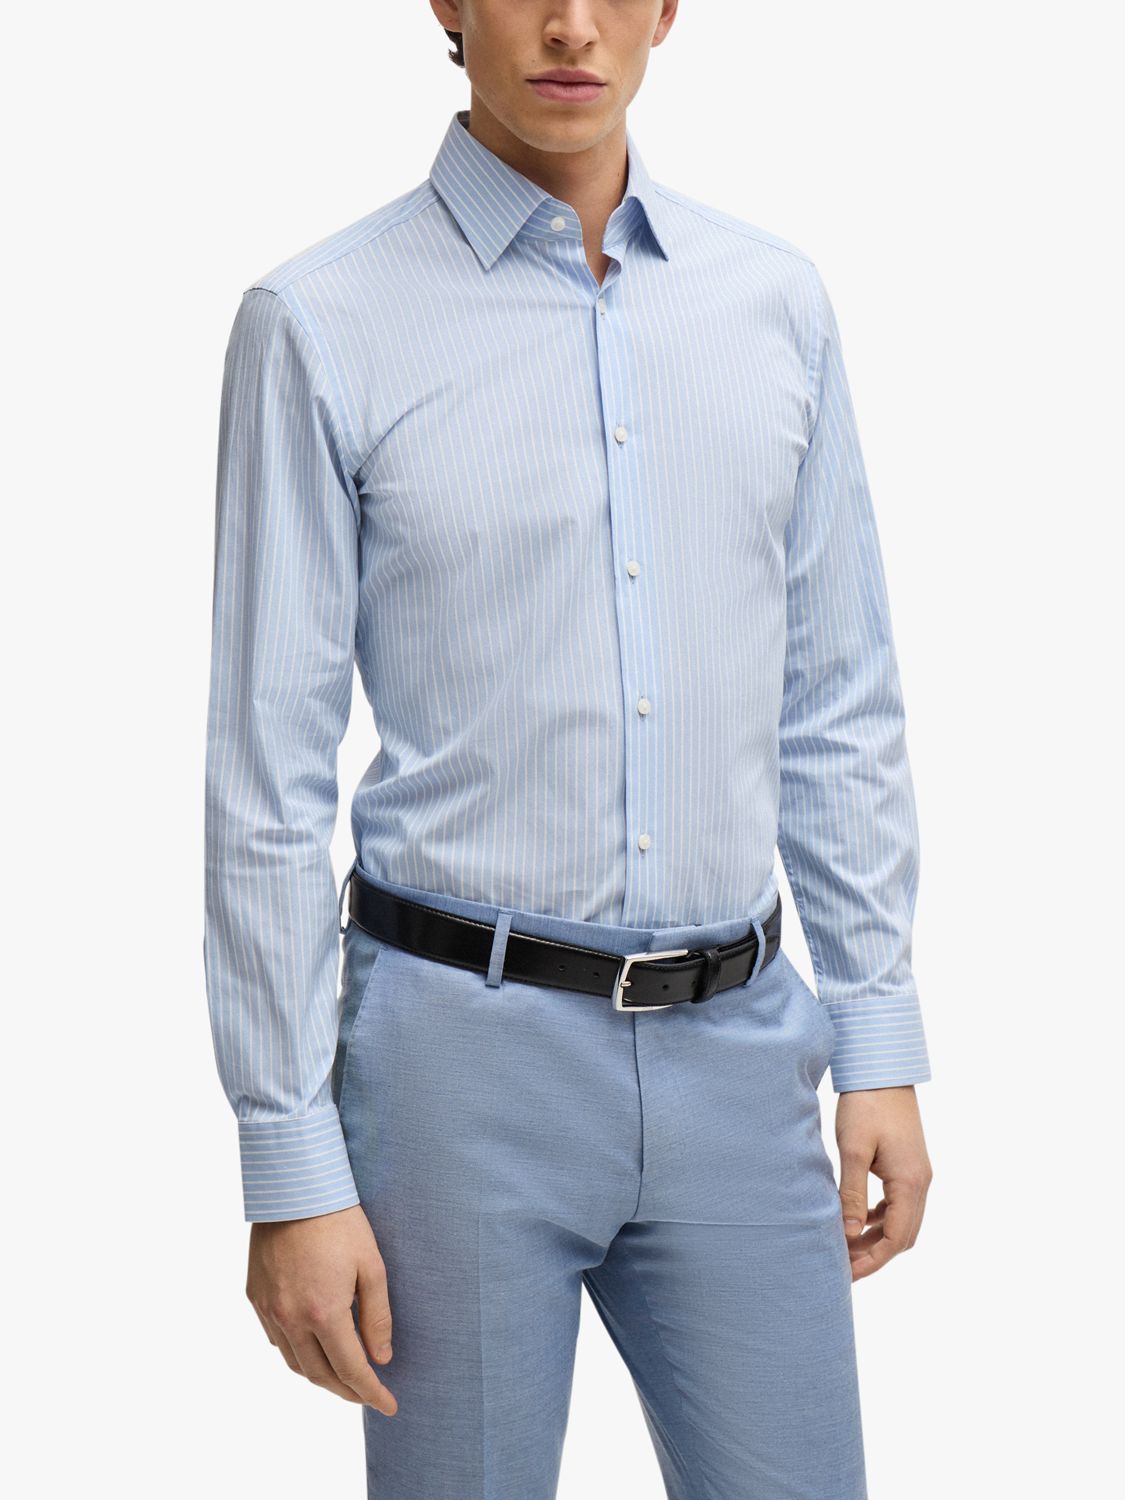 BOSS Hank Slim Fit Pinstripe Shirt, Pastel Blue/White, 15